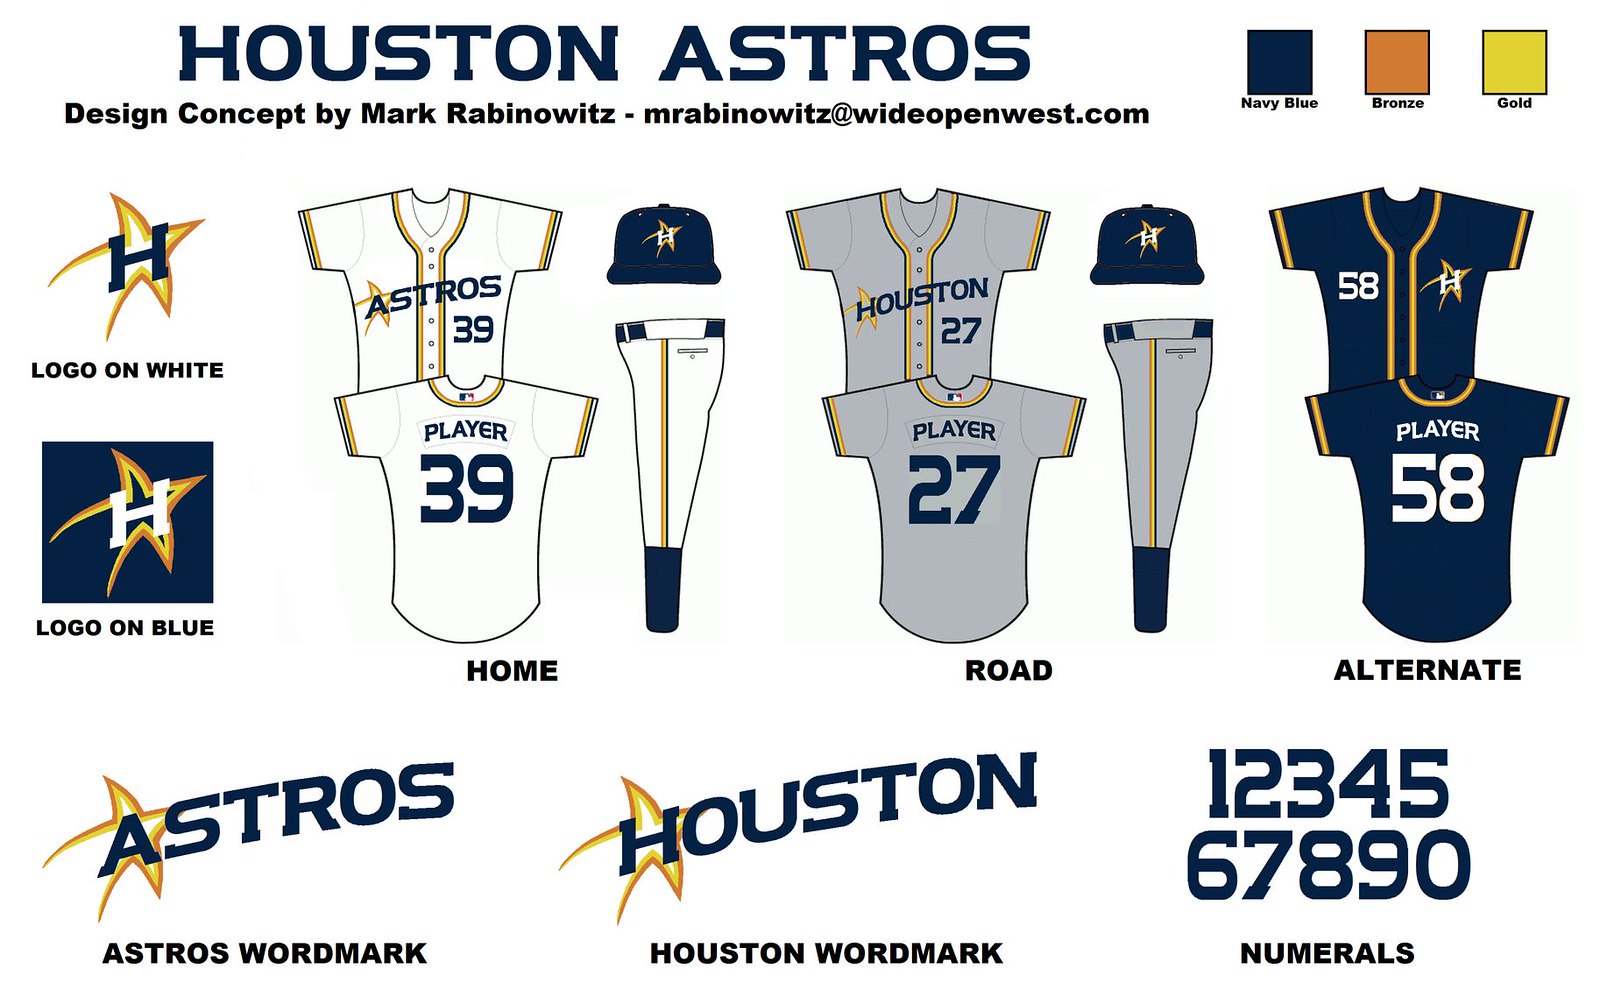 Houston Astros reveal new logo, uniform 